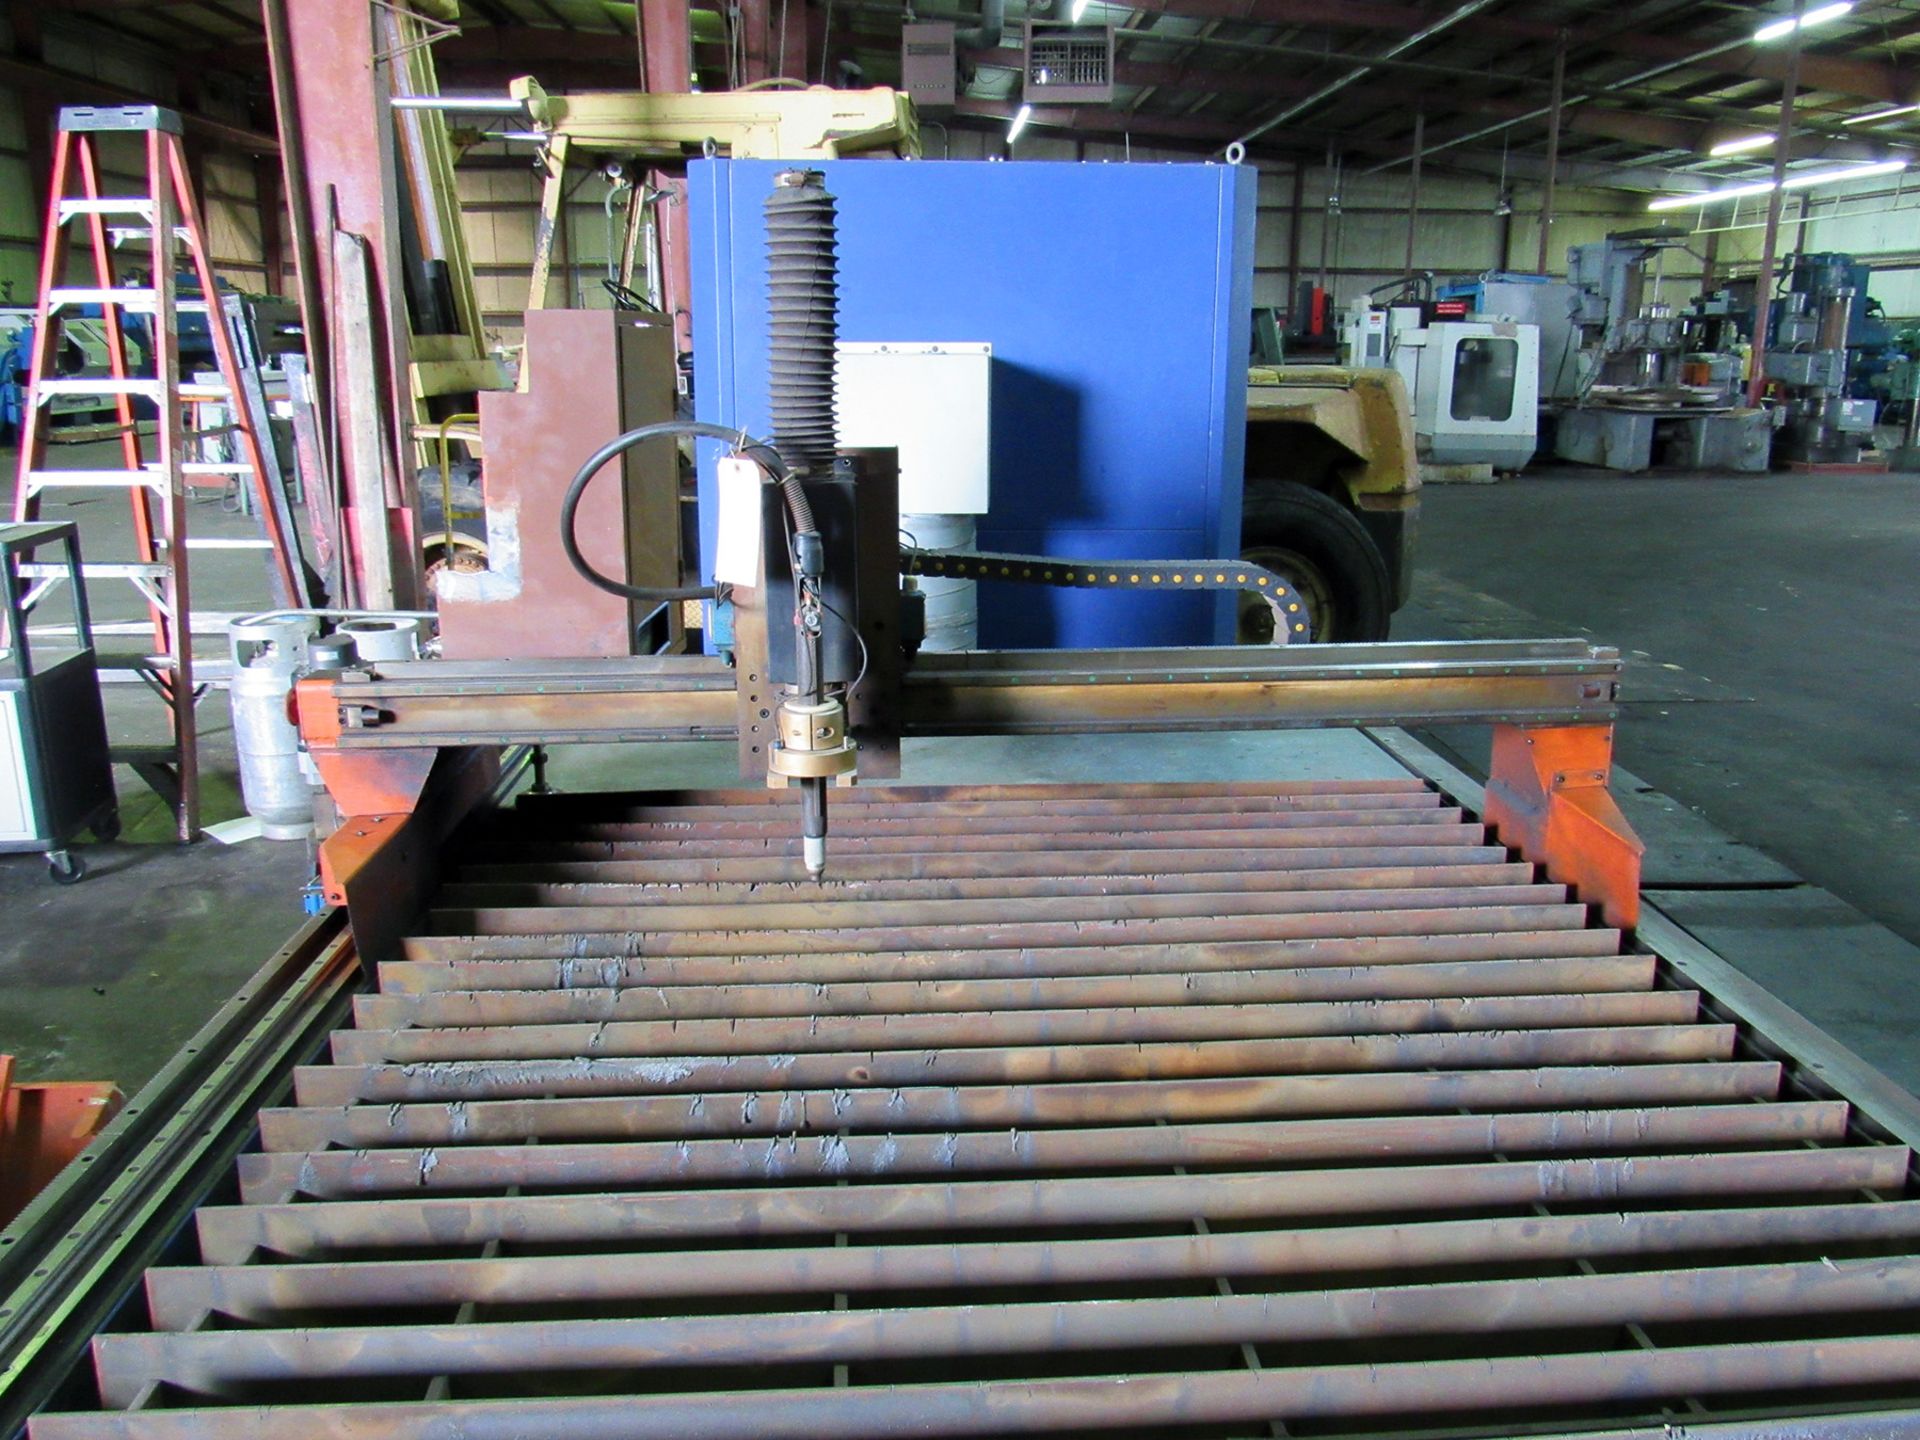 CNC PLASMA CUTTING MACHINE, VANGUARD MDL. PM510, 5' x 10 cutting cap., single plasma torch, - Bild 4 aus 8